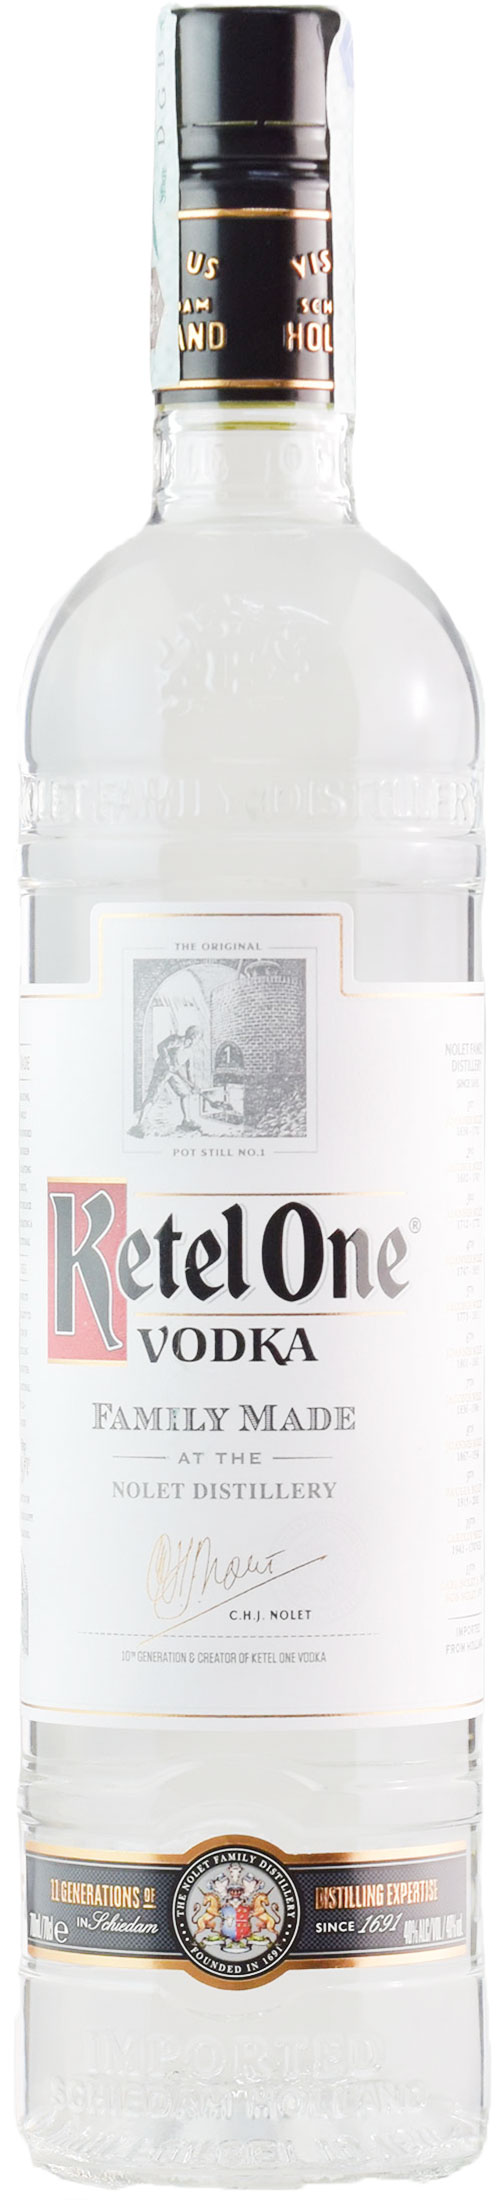 Ketel One Vodka 0.7L